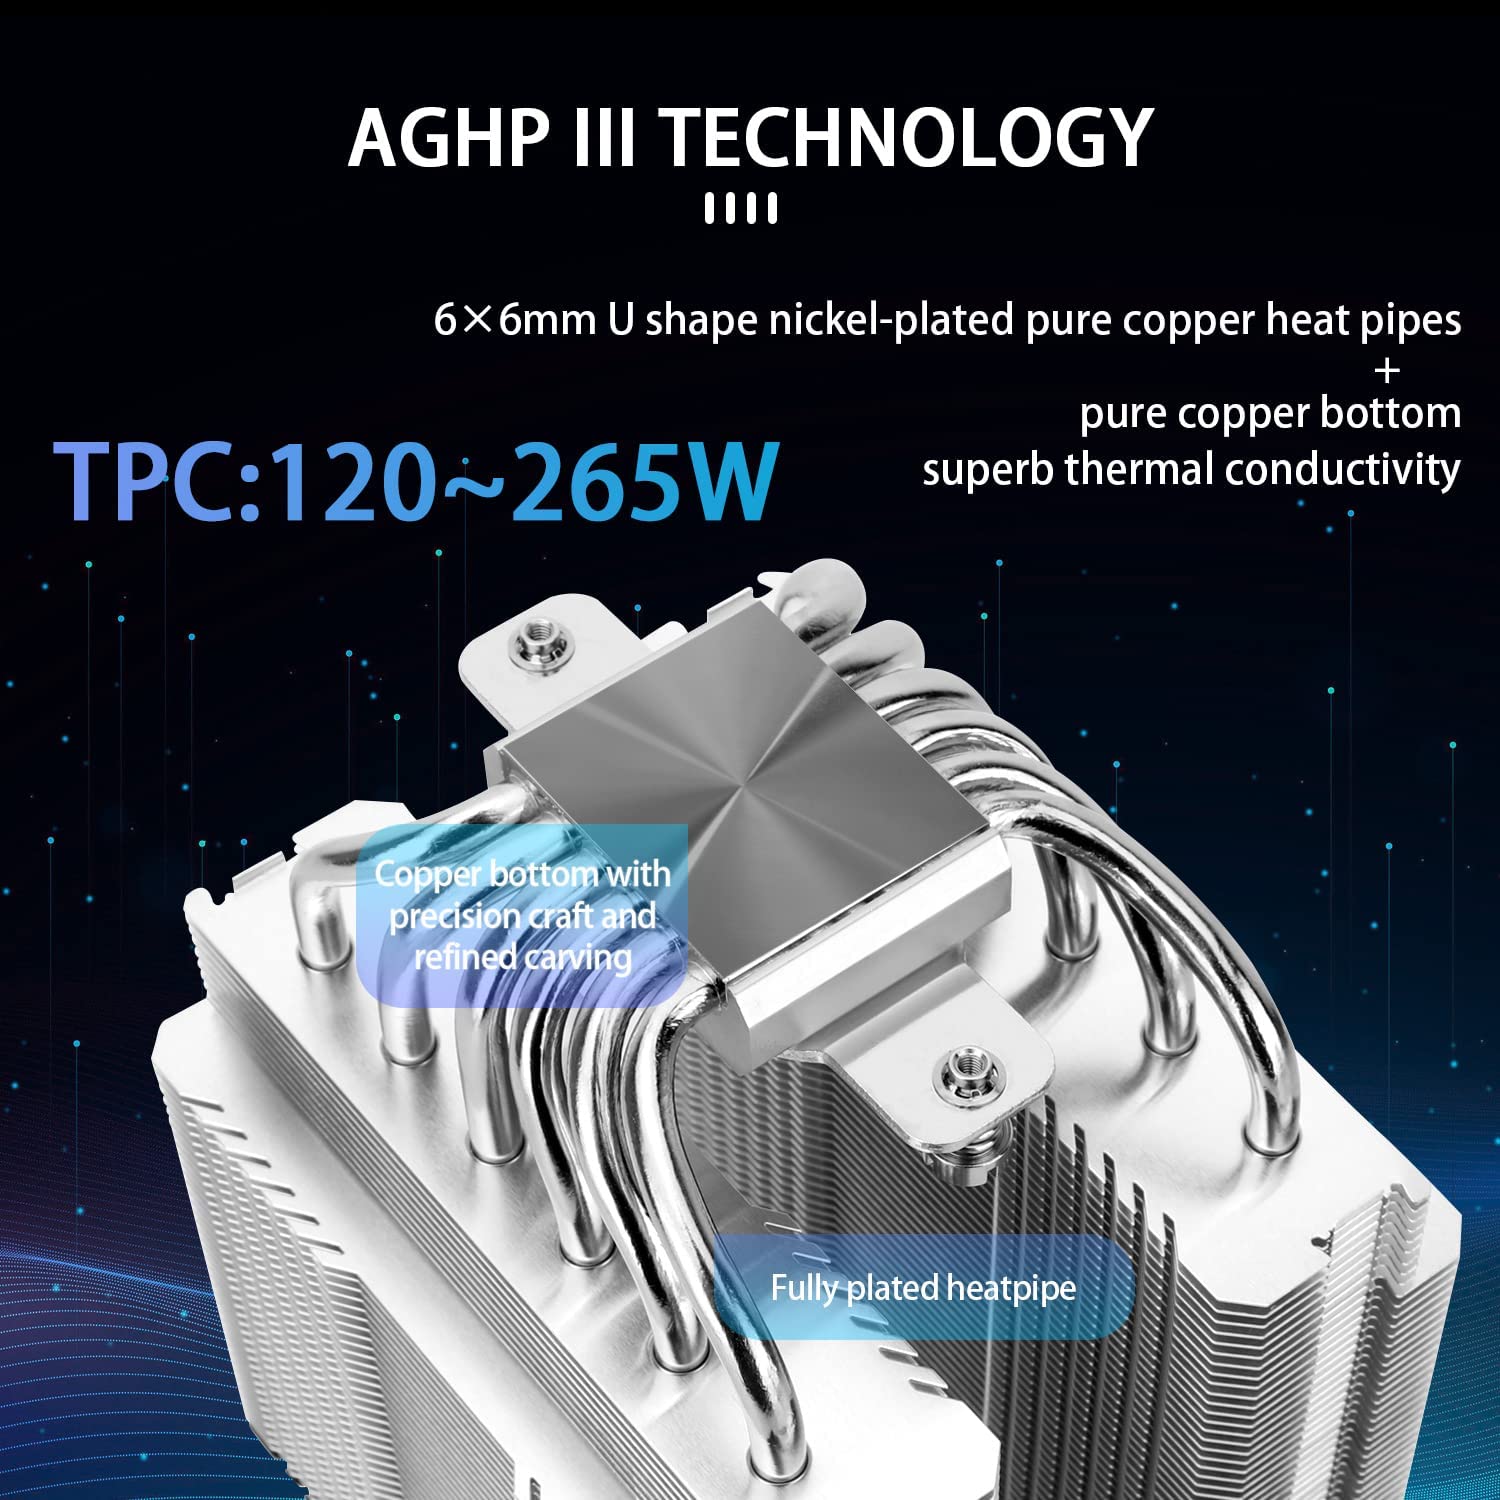  Thermalright Peerless Assassin 120 CPU Air Cooler - 6 Heat  Pipes, Dual 120mm Fans, Aluminium Heatsink, AGHP Tech, for AMD/Intel CPUs :  Electronics